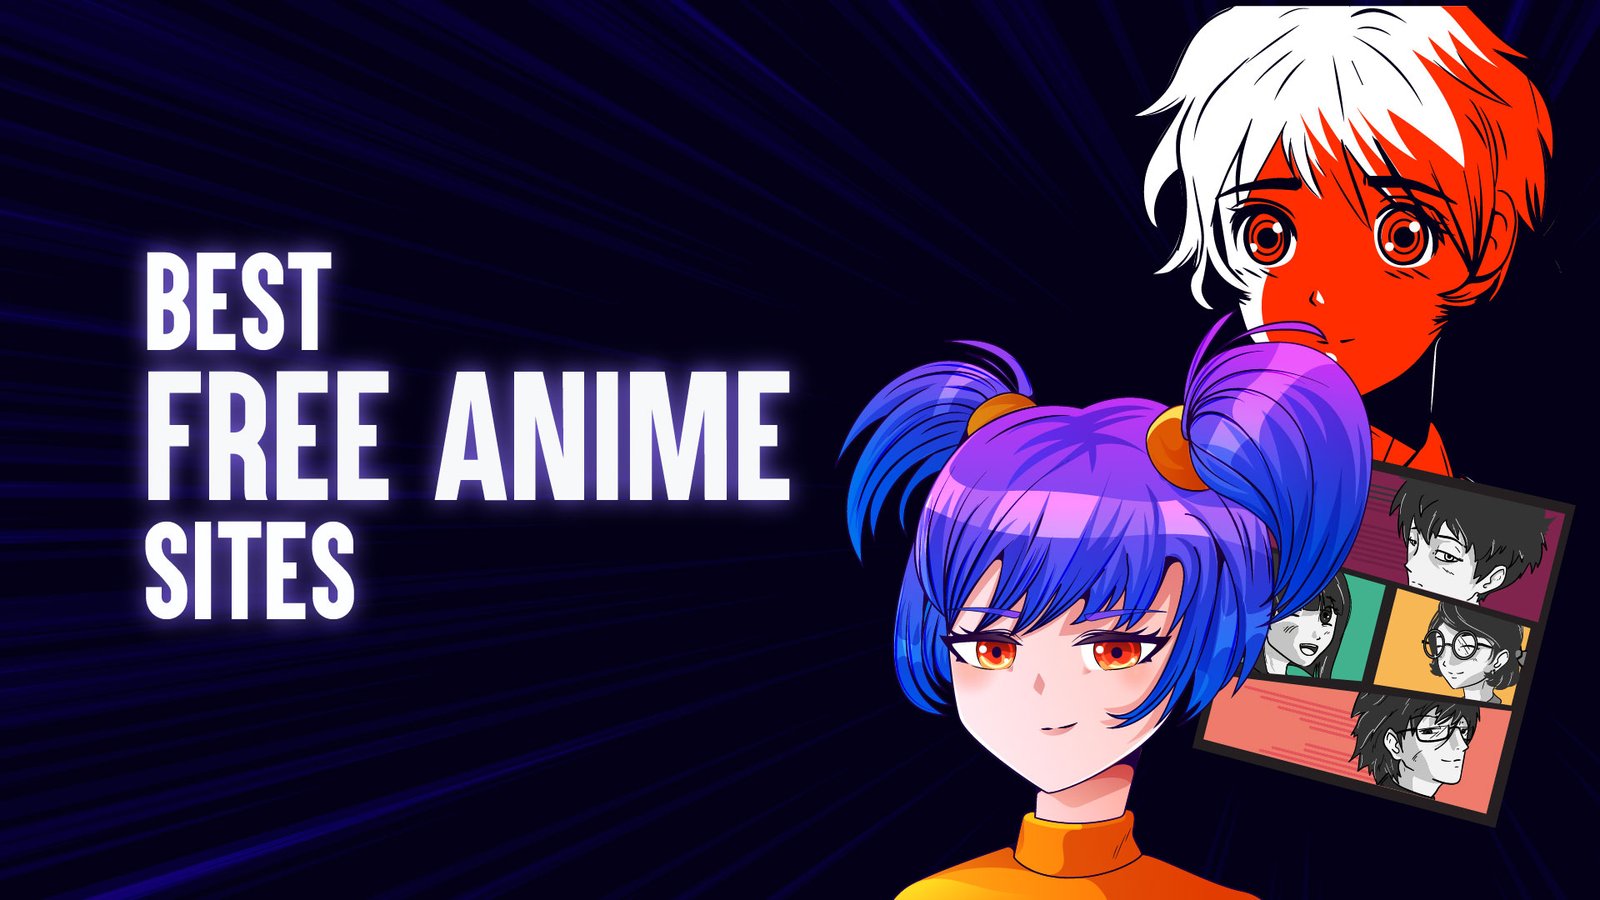 32 Animekisa Alternatives in 2023 [Guide to Stream Free Anime]